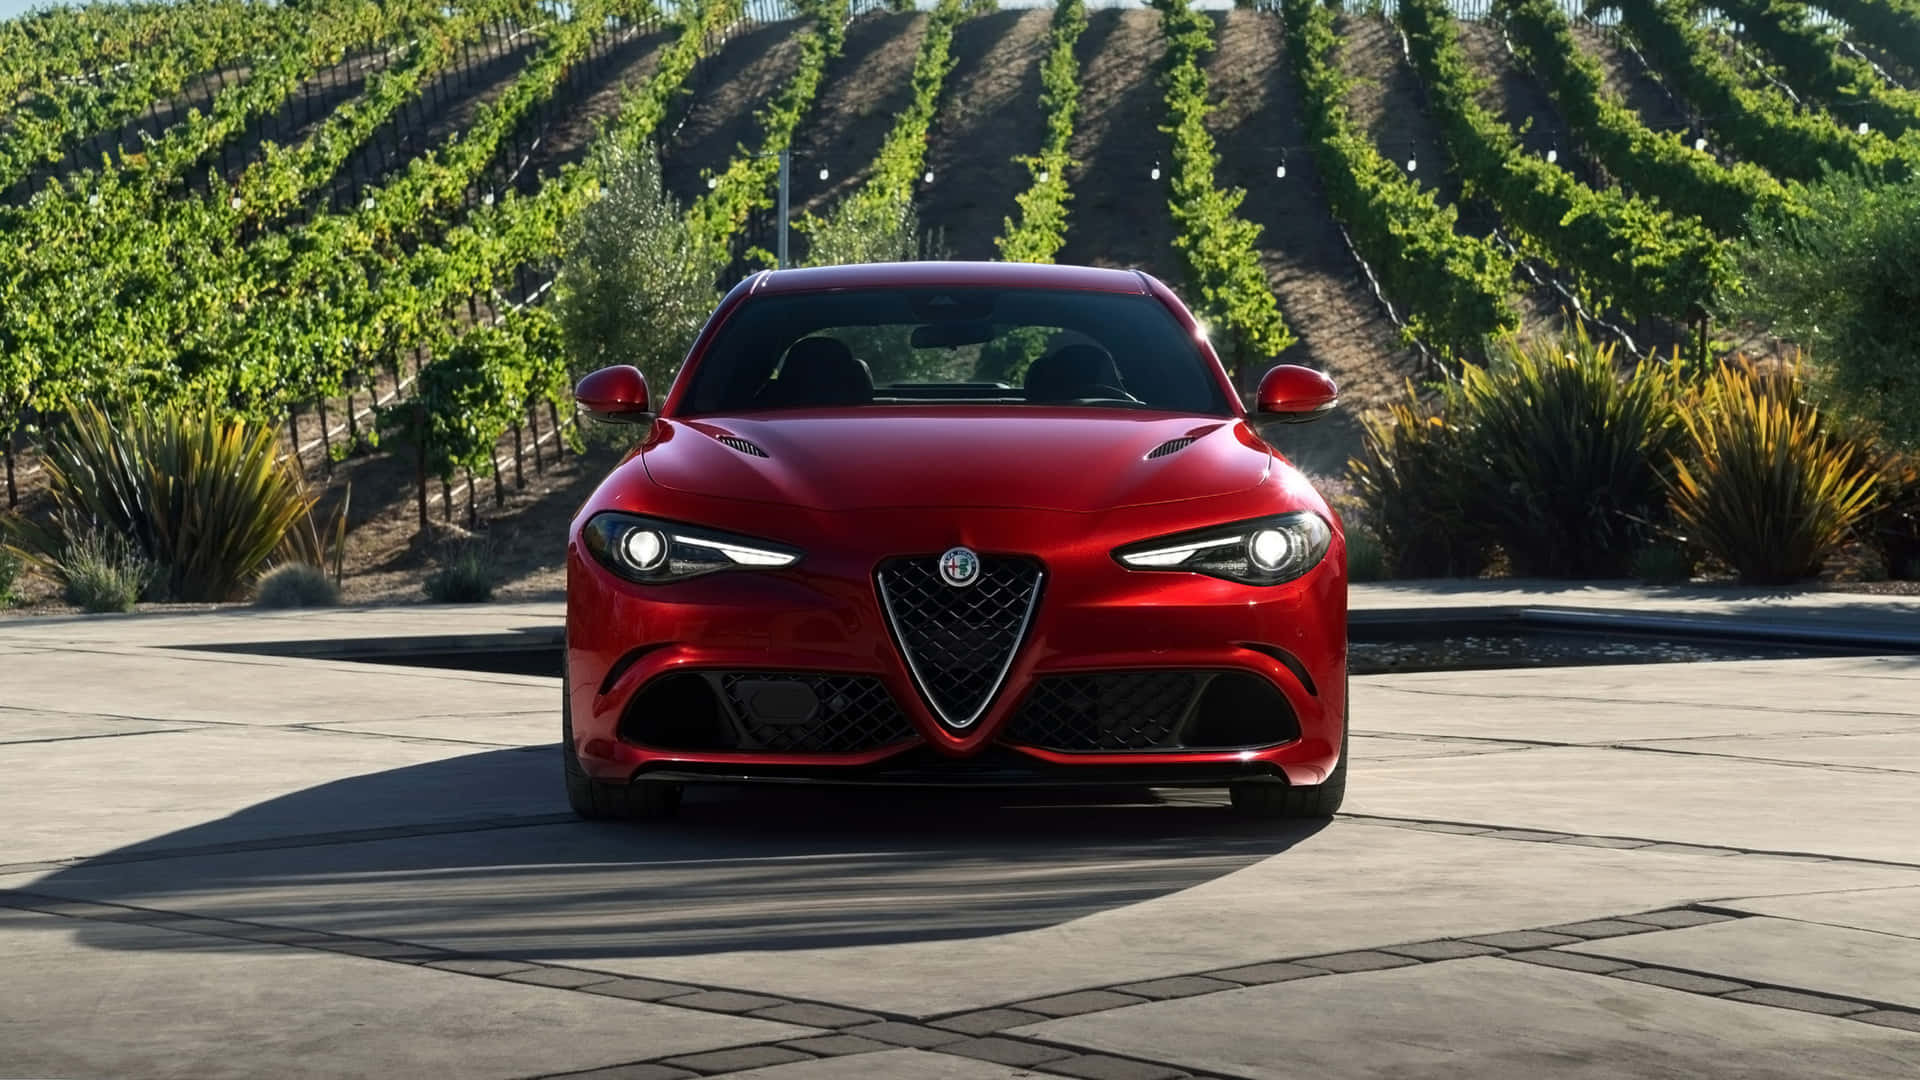 Sleek Alfa Romeo Giulia in Action Wallpaper